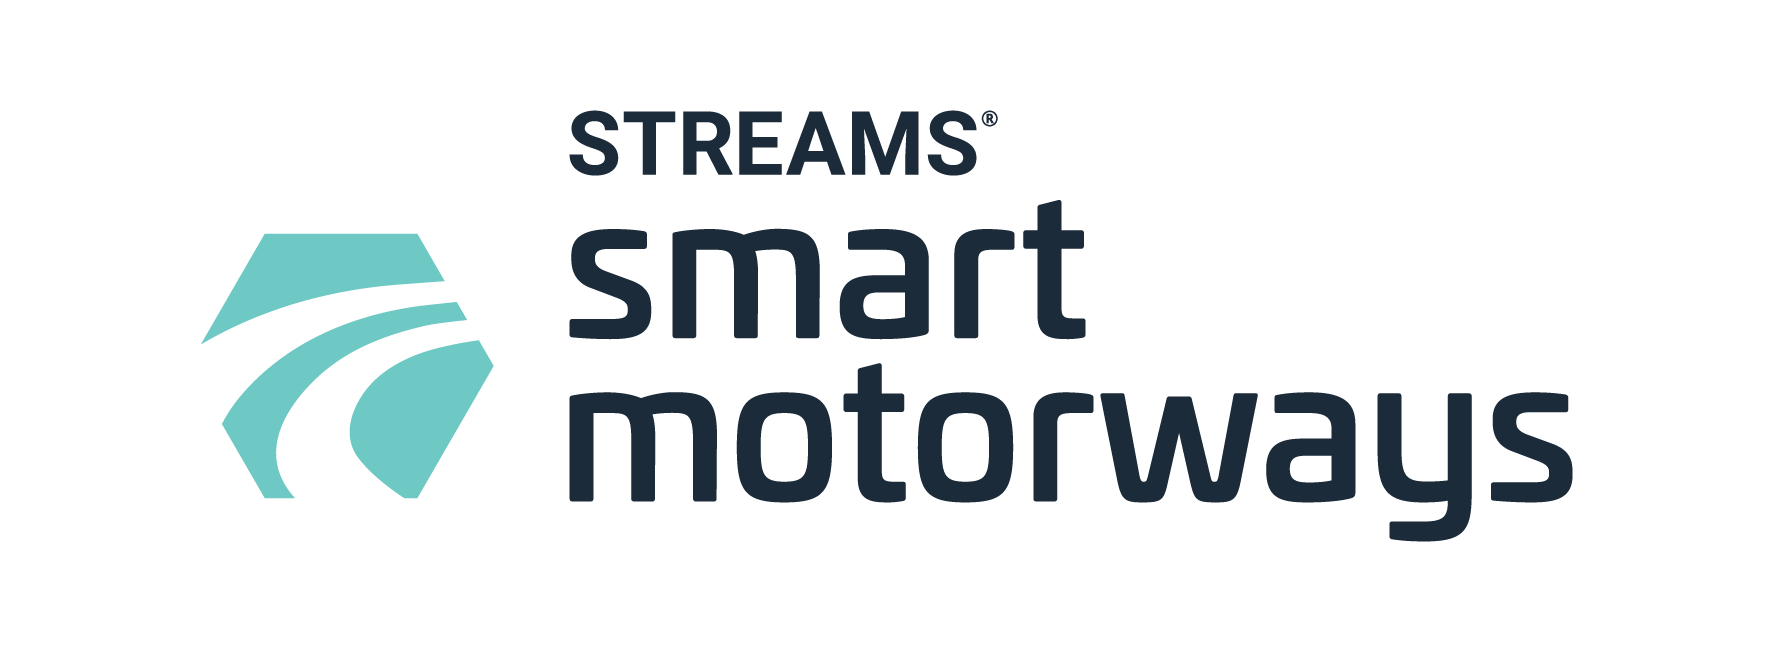 STREAMS® Smart Motorway_LOGO_RGB___master